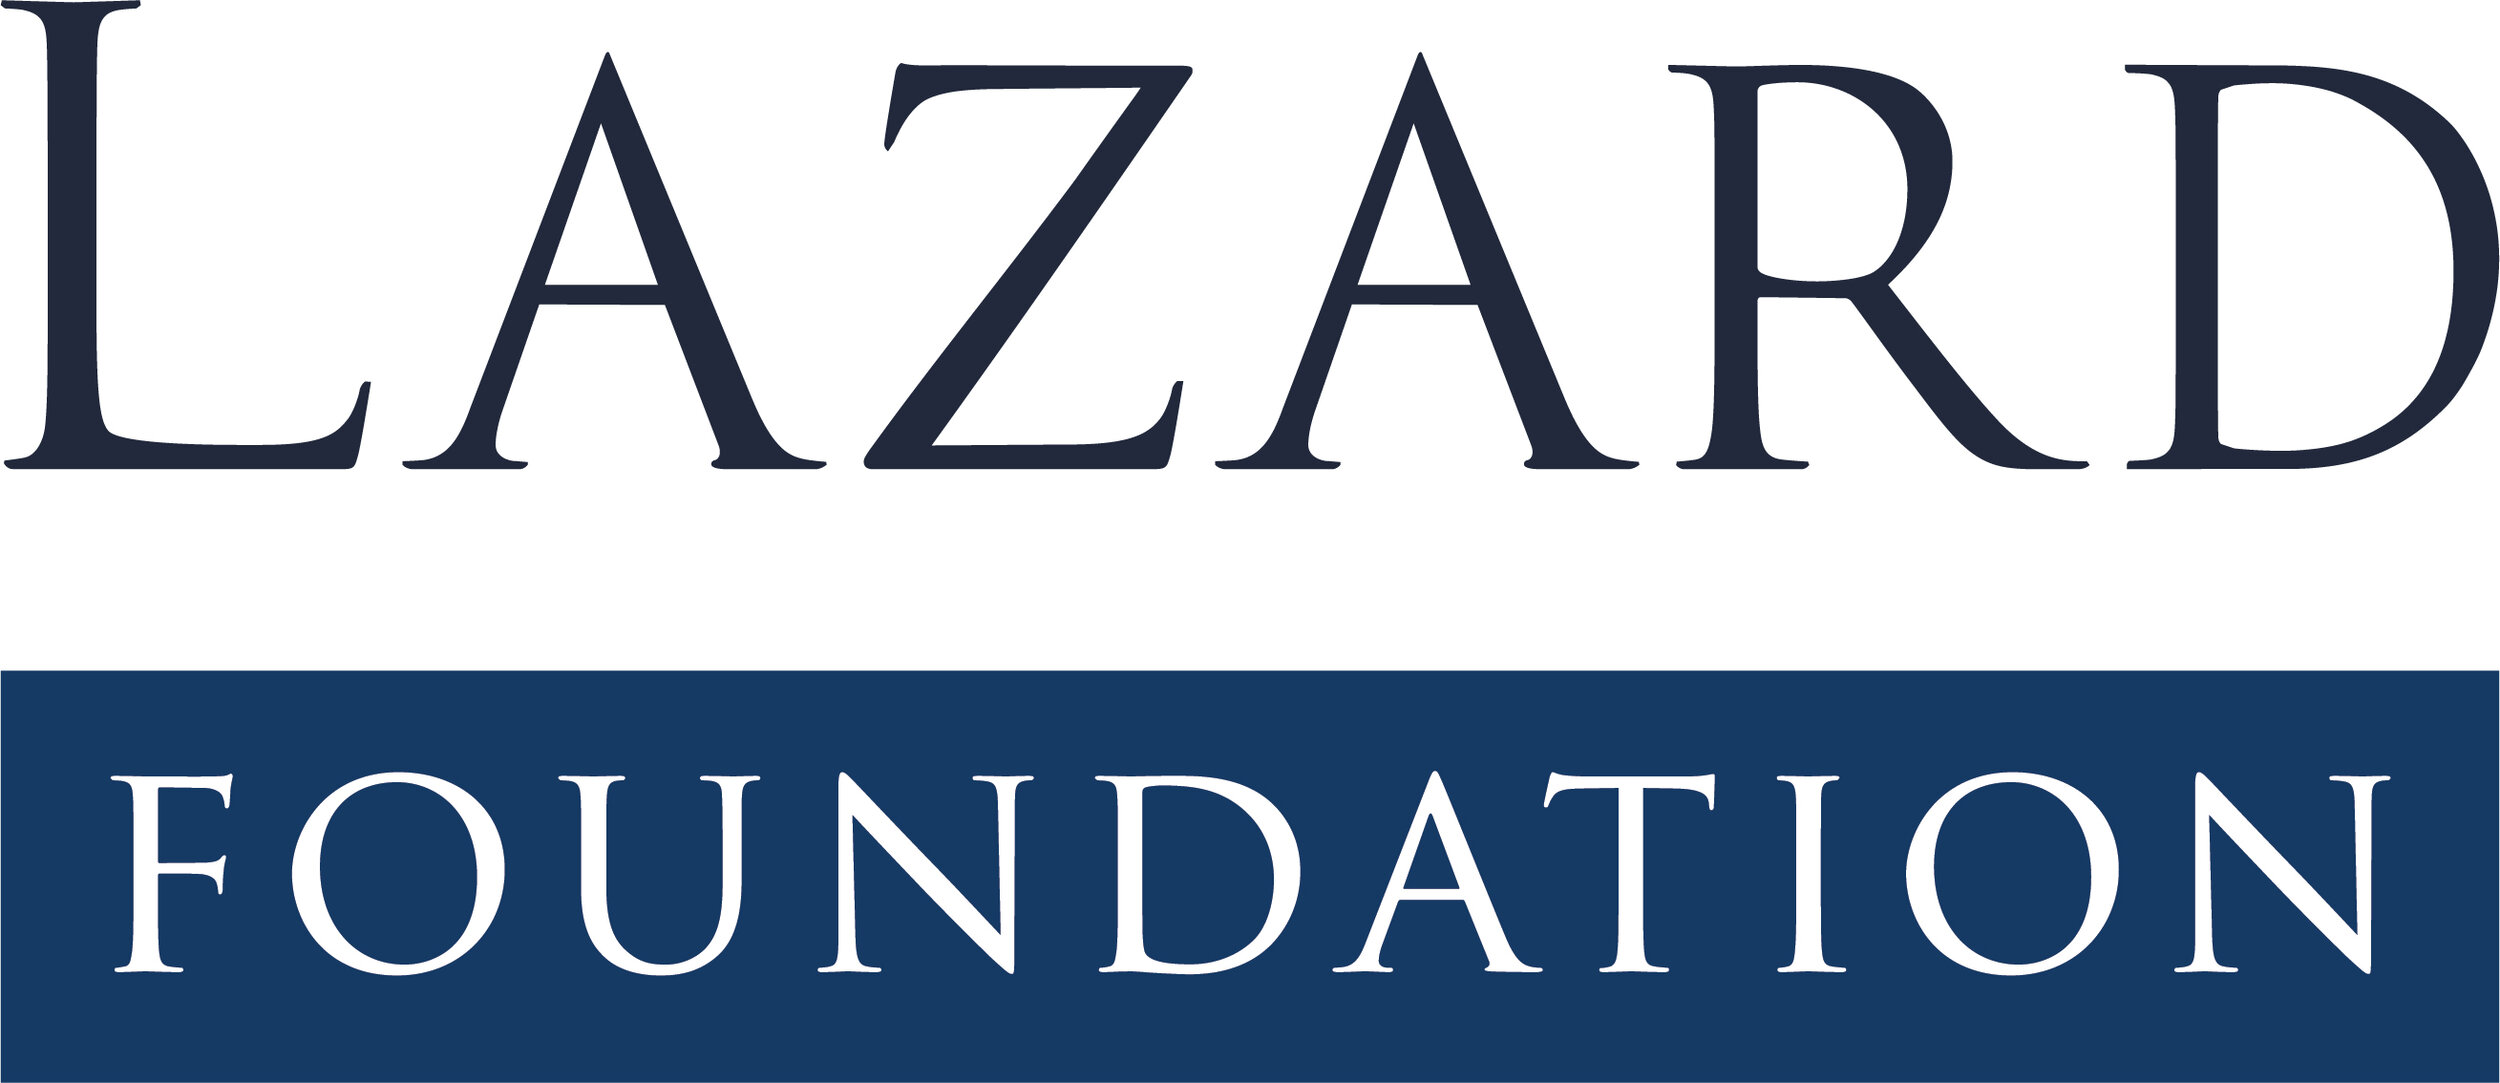 Lazard Foundation Logo_High Res.jpg